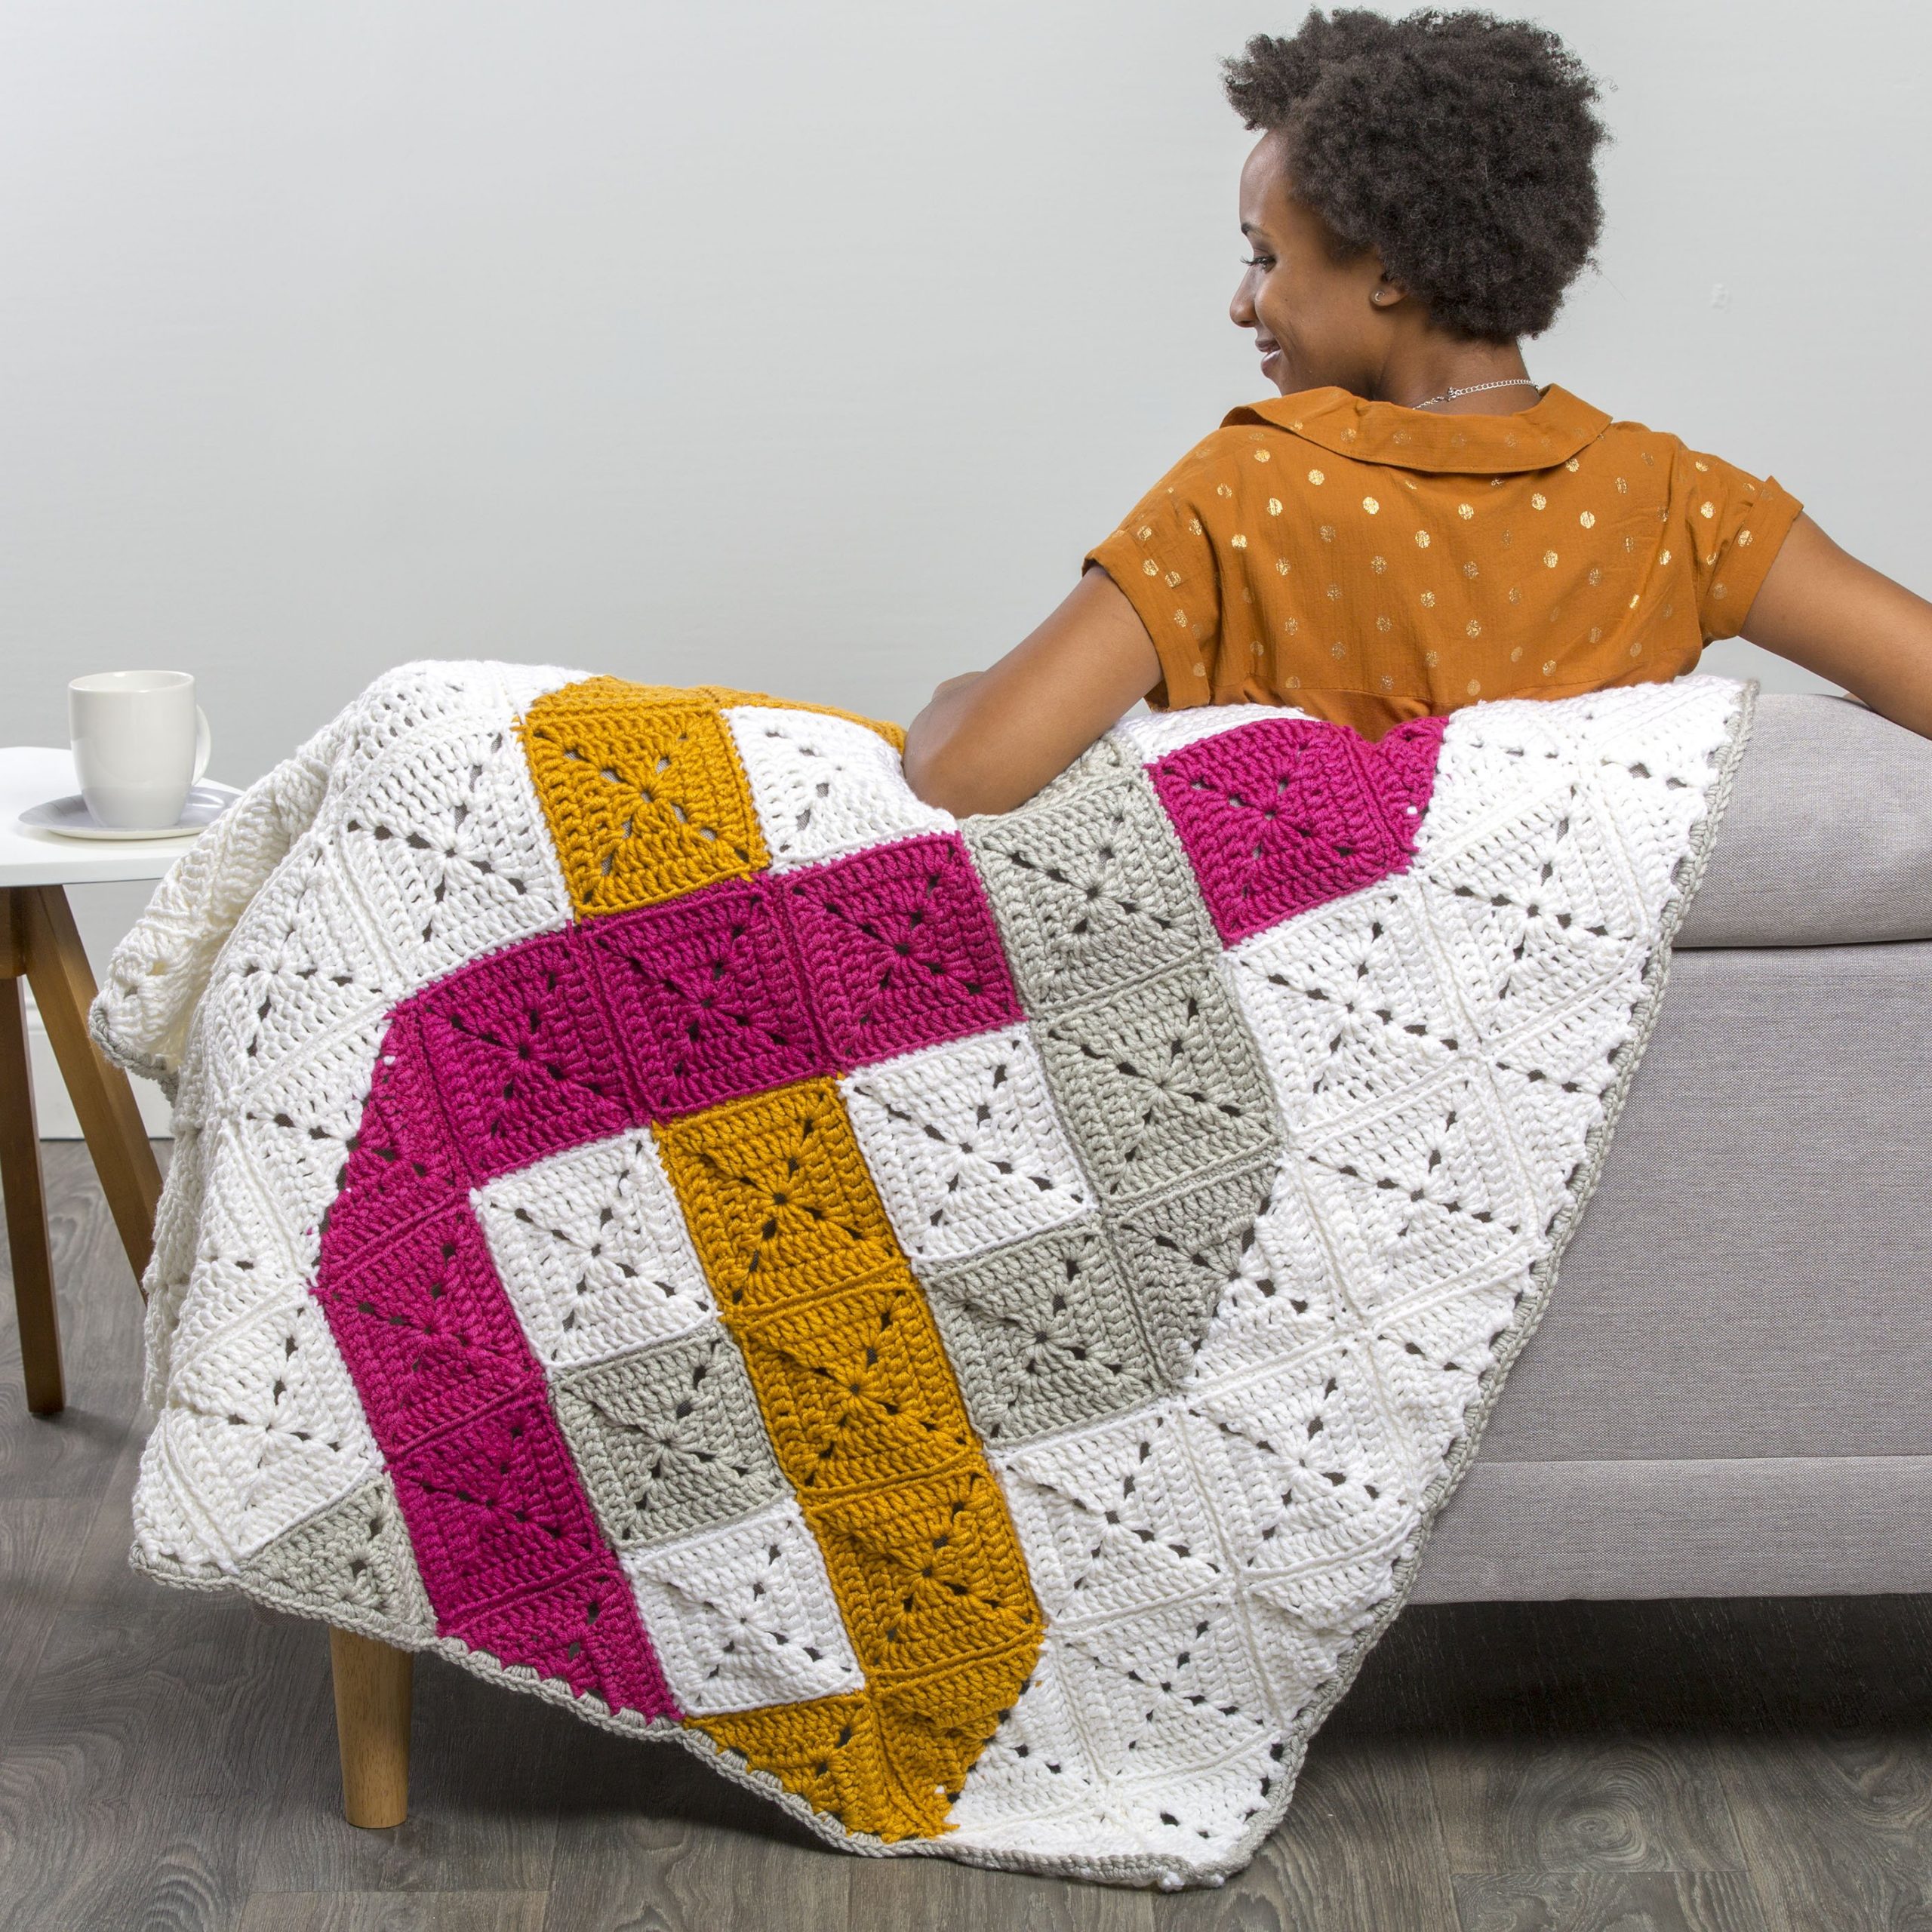 Crochet Woven Throw free pattern